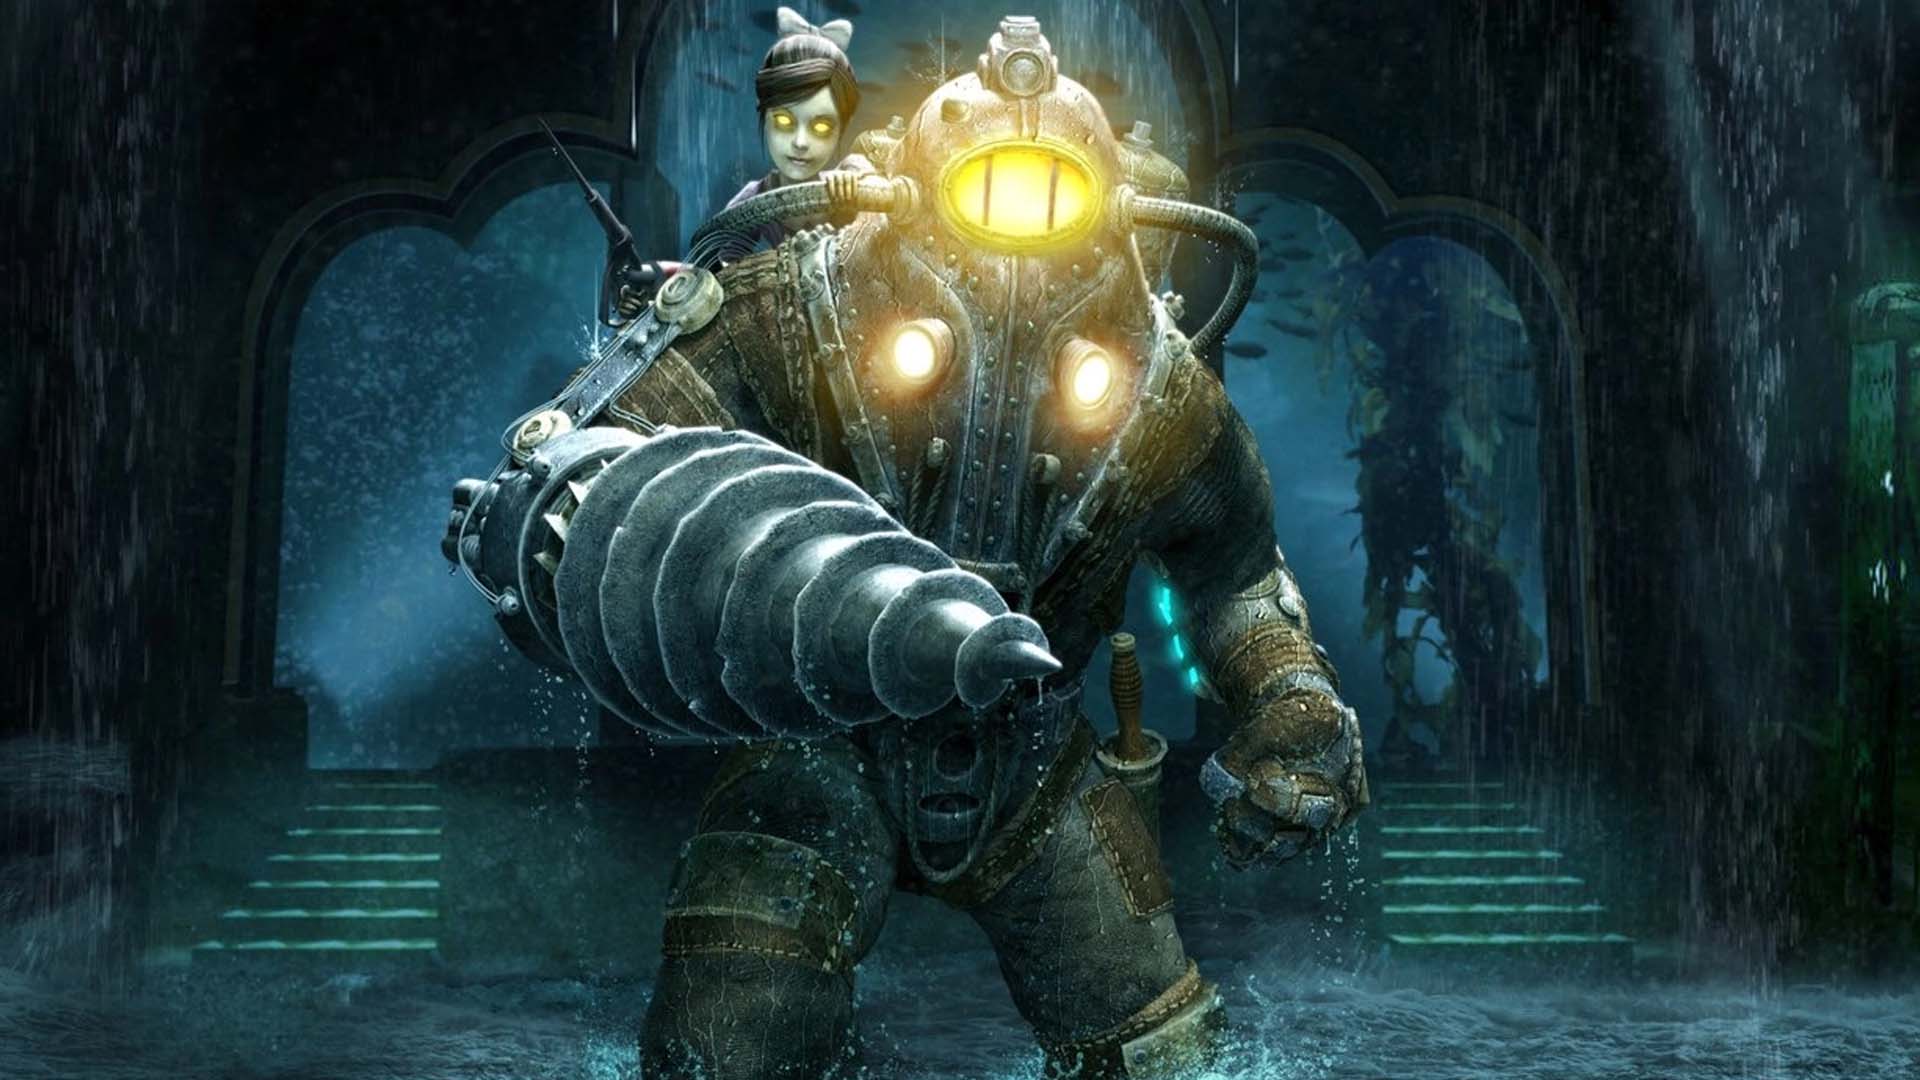 Buy BioShock Infinite from the Humble Store